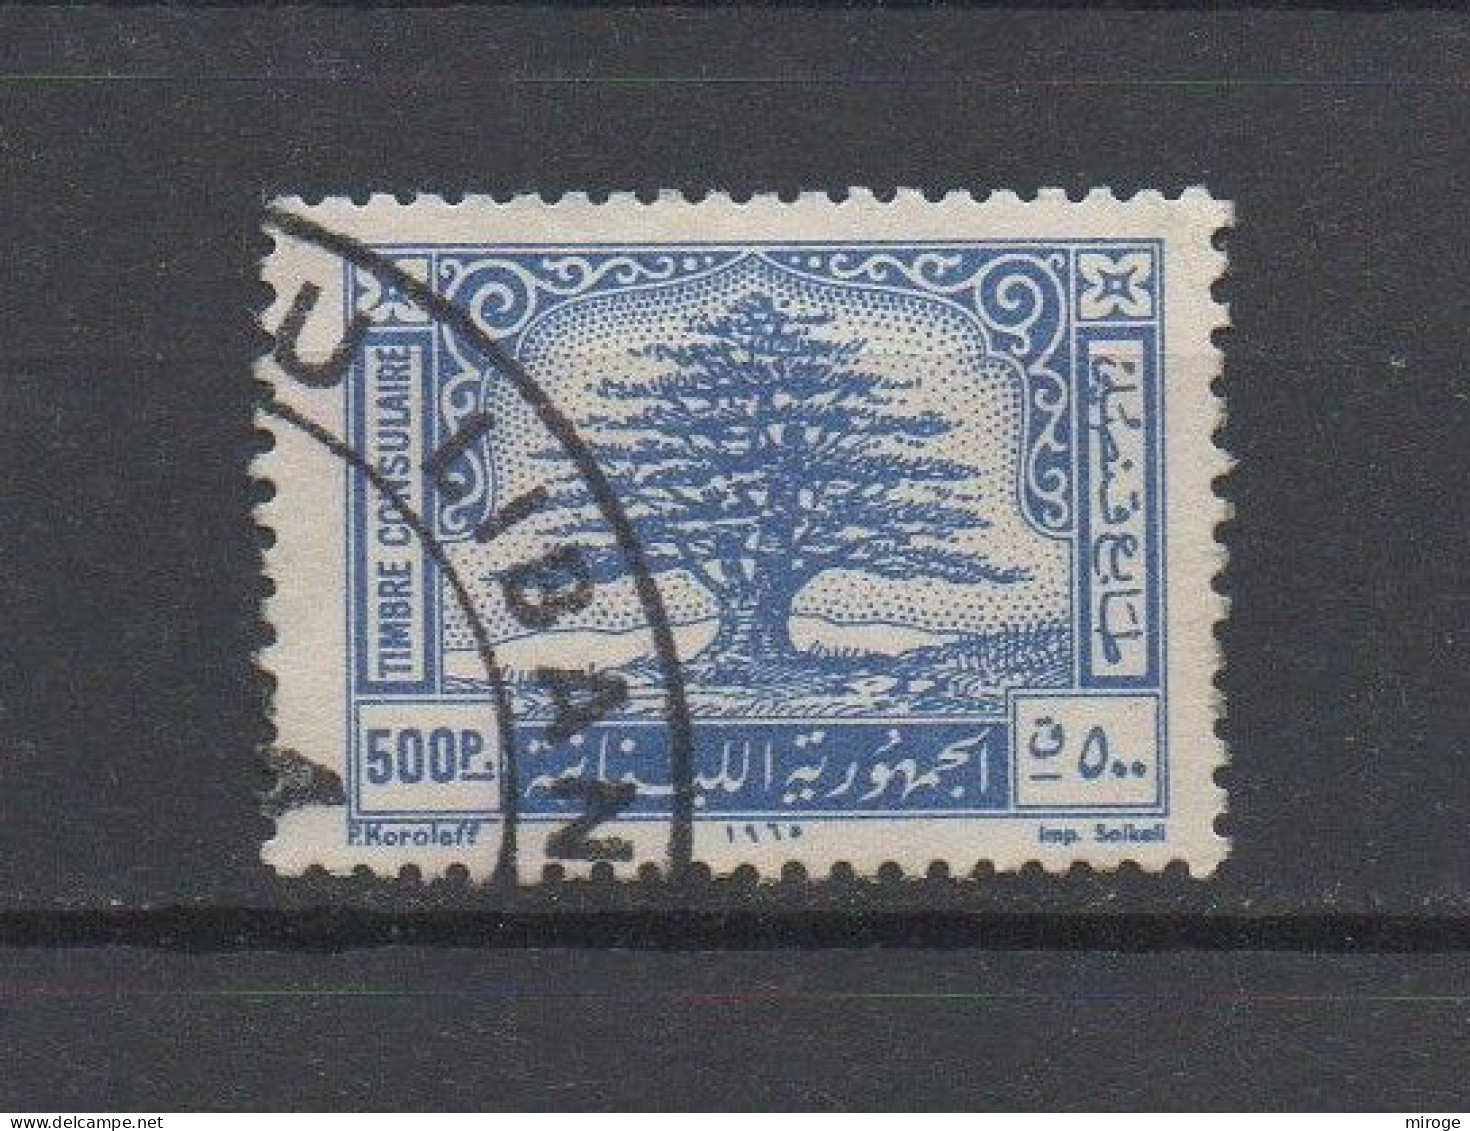 Consular 1965 500p Lebanon Used Stamp Revenue Cedar Design, Liban Libanon - Liban